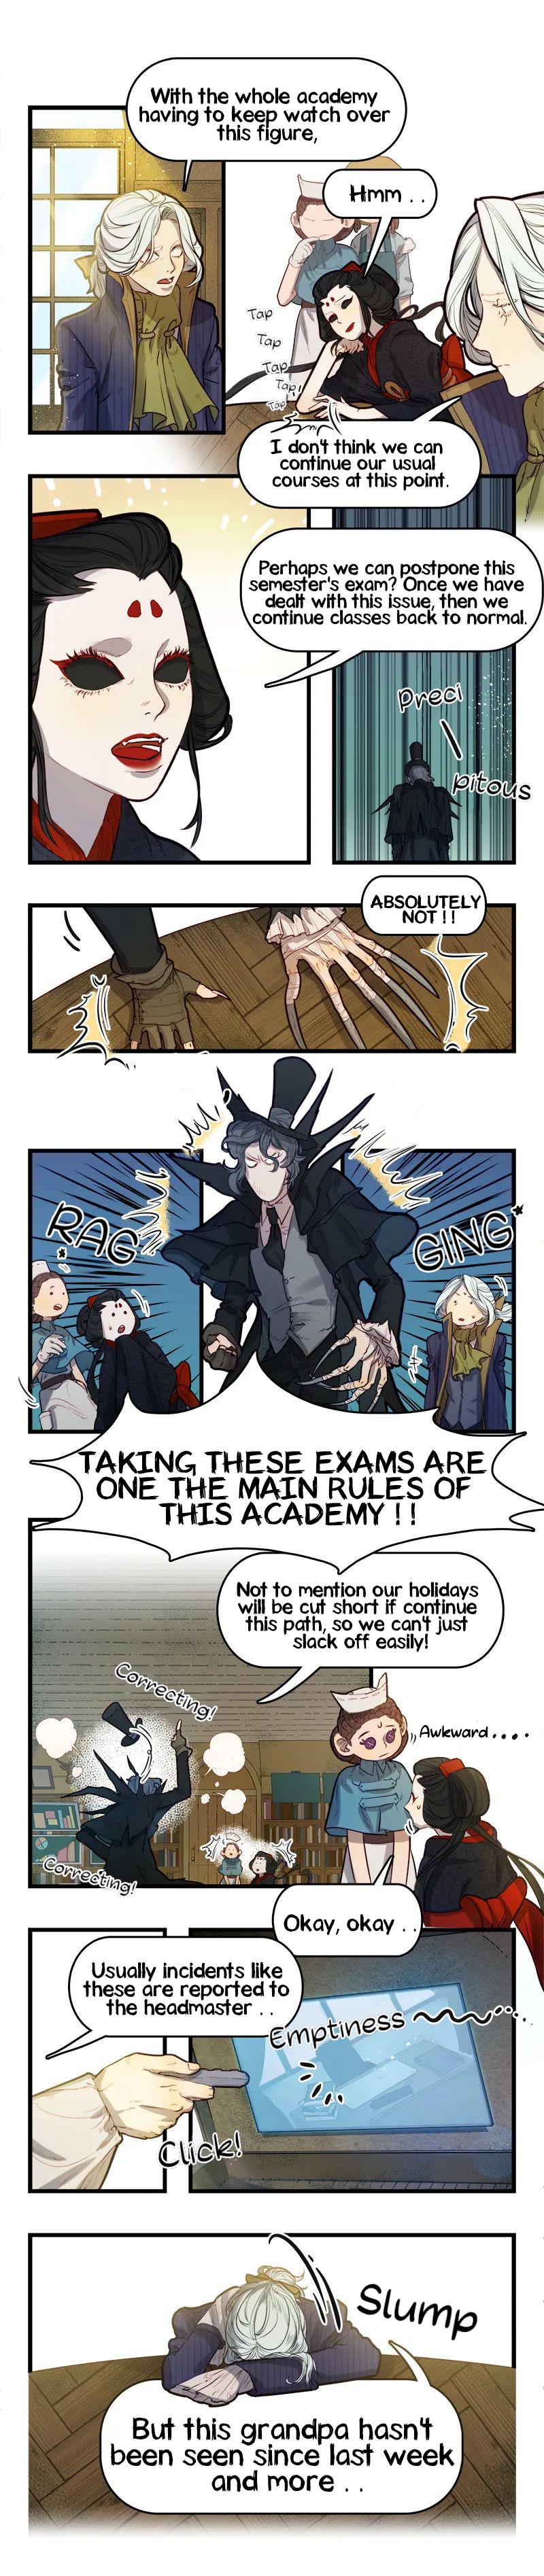 Identity V Academy - Page 2